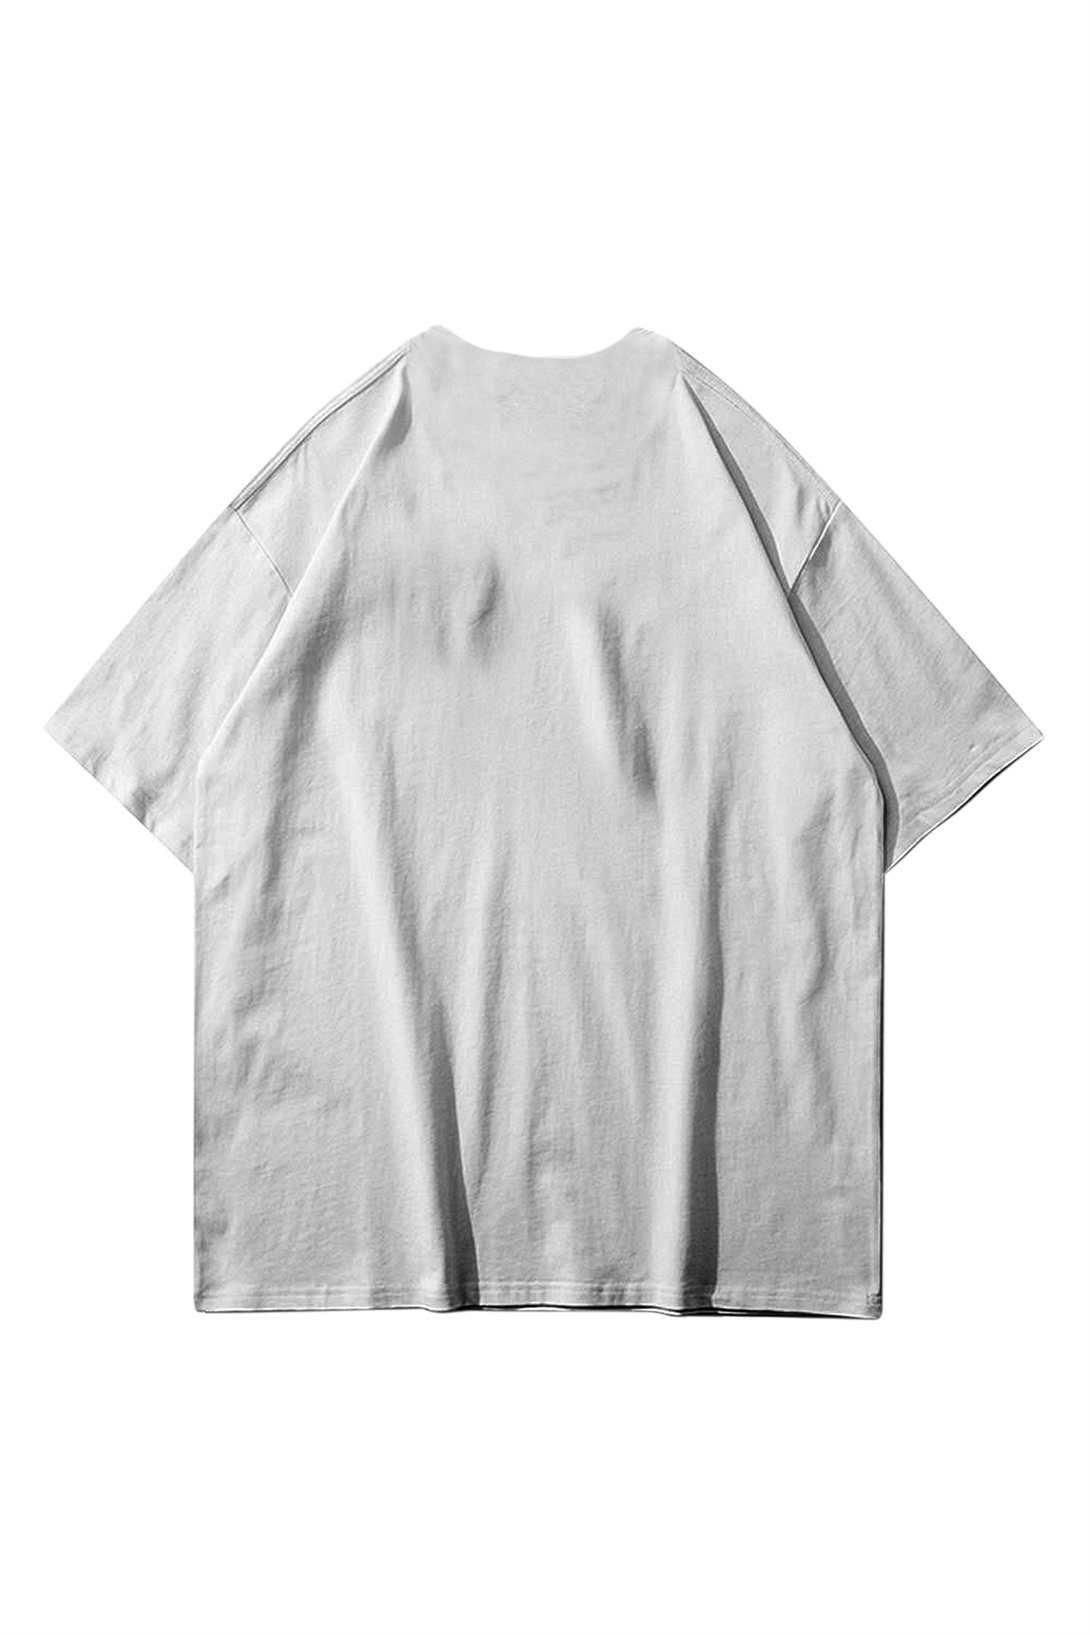 Trendiz Unisex Young Boy Beyaz T shirt